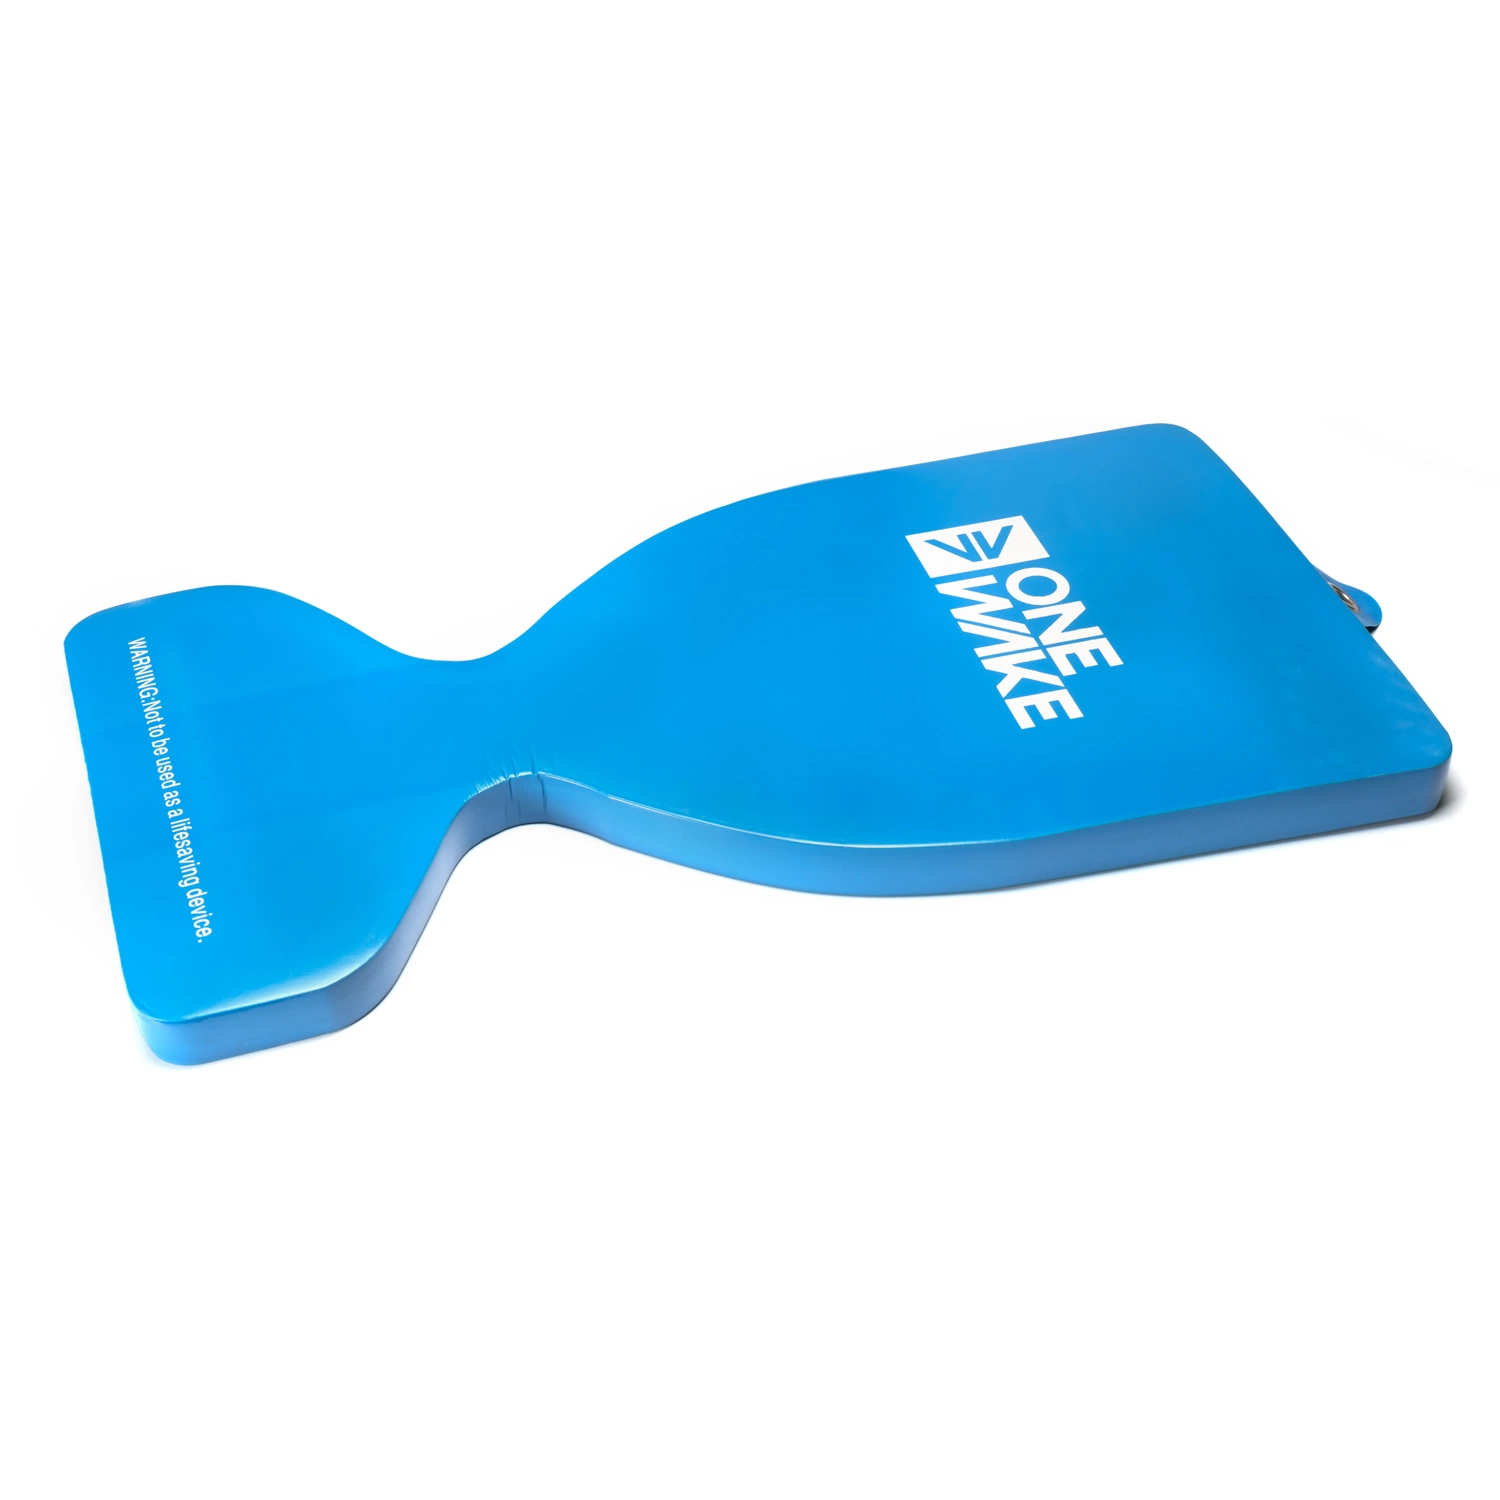 Water Equipment Portable Play Toy Floating Seat NBR PVC Foam Swim Pad Mat Sport Fitness Beach Swimming Pool Water Saddle Float